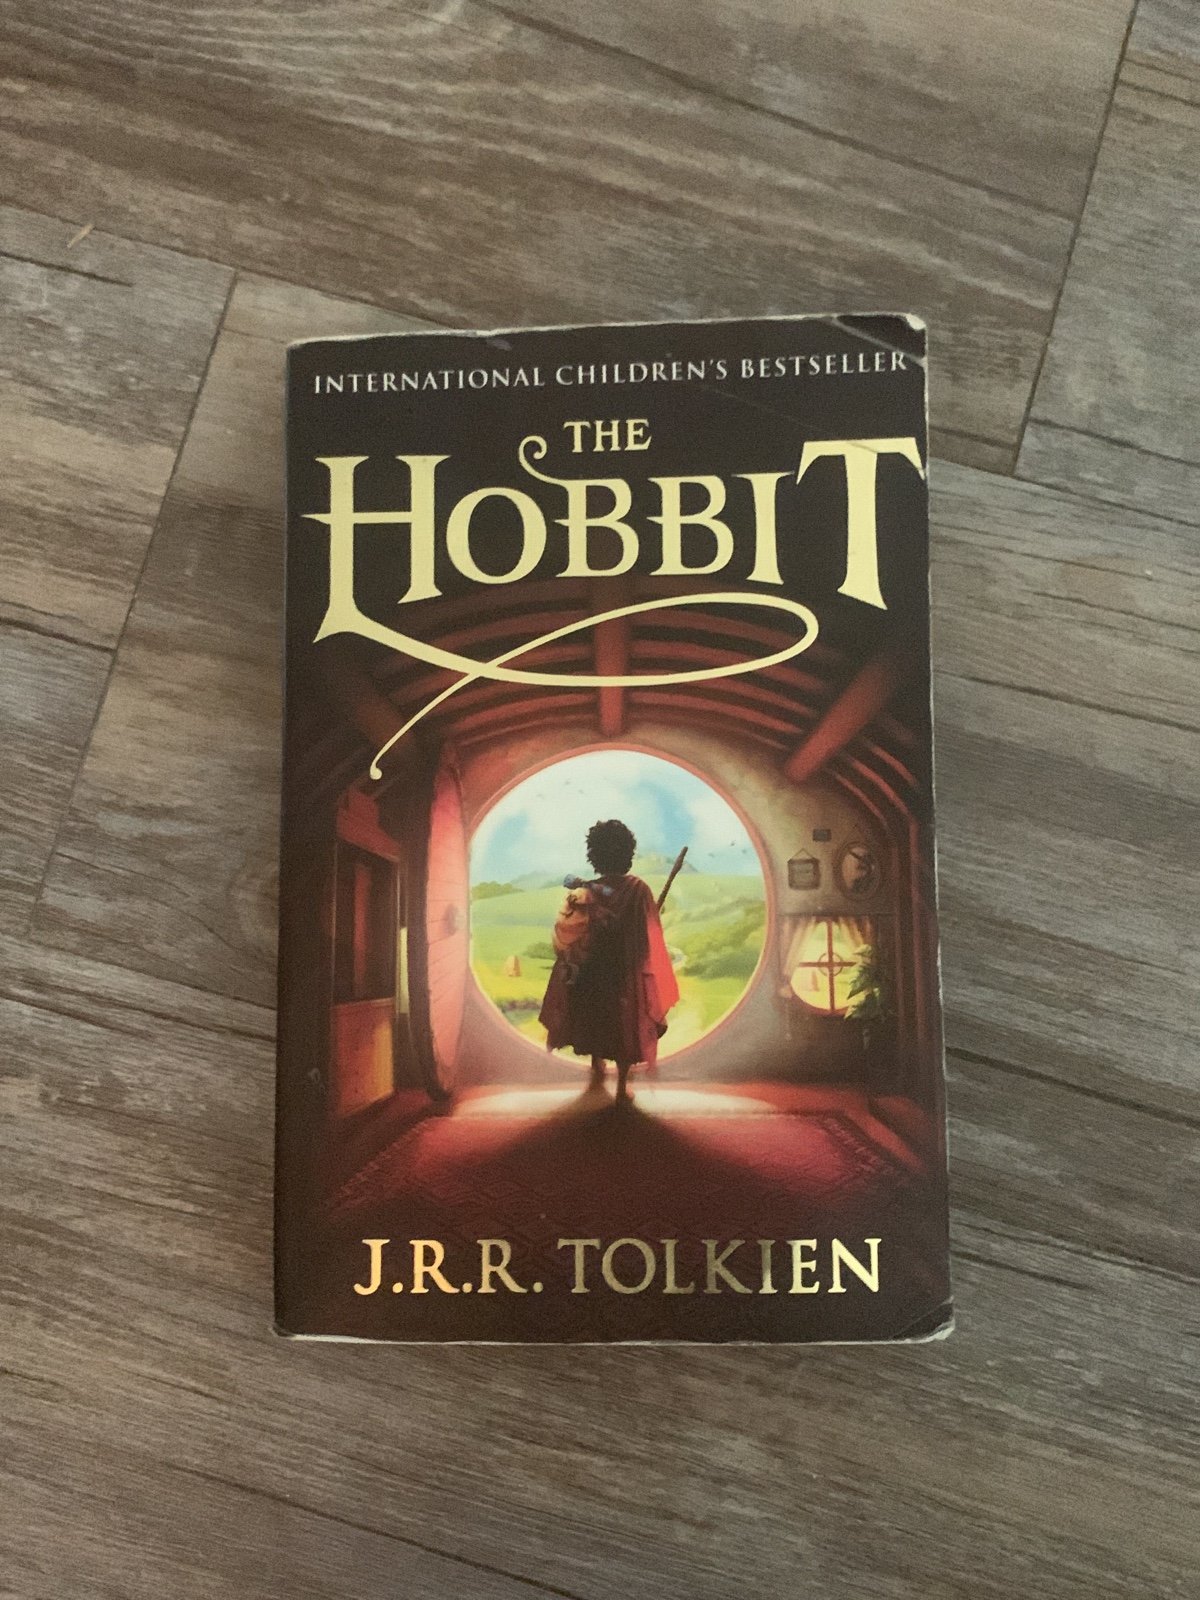 The hobbit by JRR Tolkien JTjACnhFg